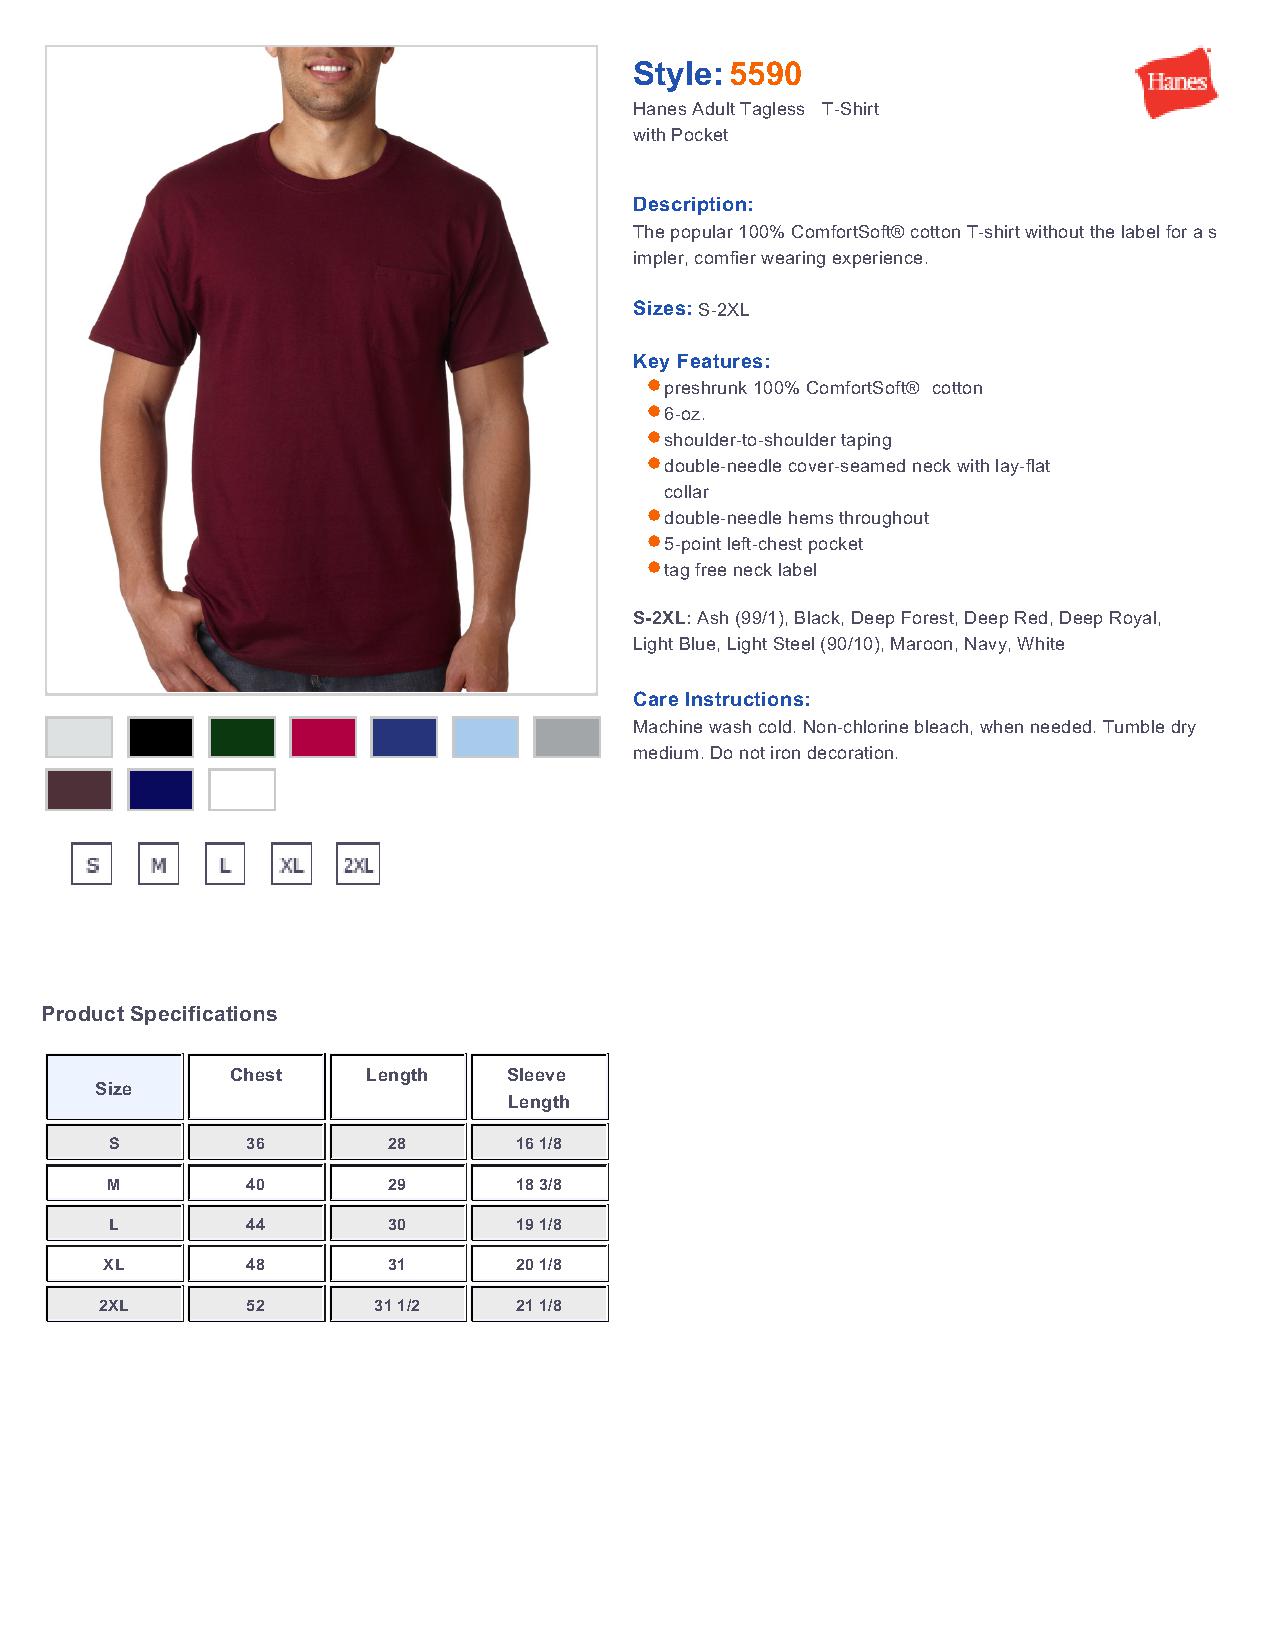 Hanes 5590 - Adult Tagless Pocket T-Shirt $5.16 - Men's T-Shirts